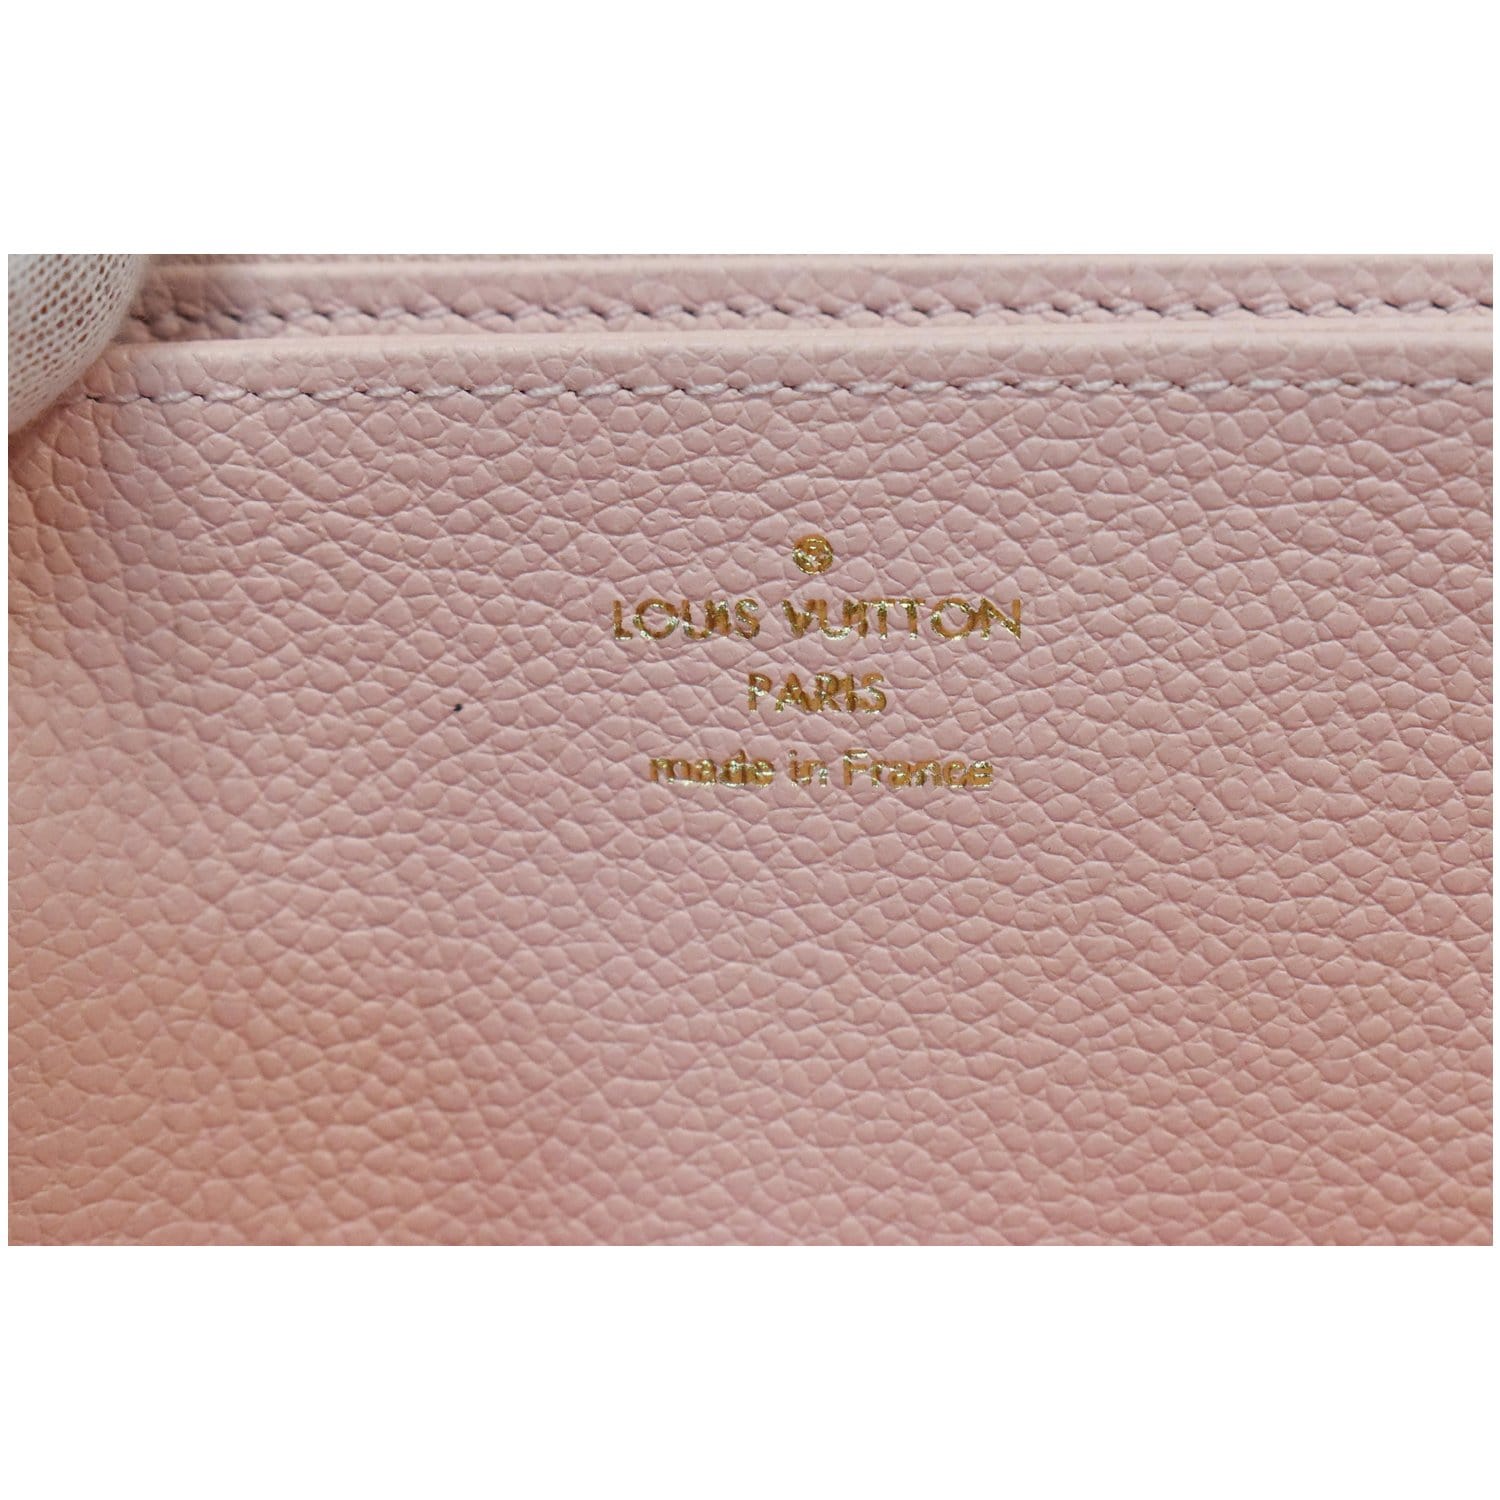 Louis Vuitton Pink Monogram Empreinte Zoe Wallet QJAJOT1DPB001